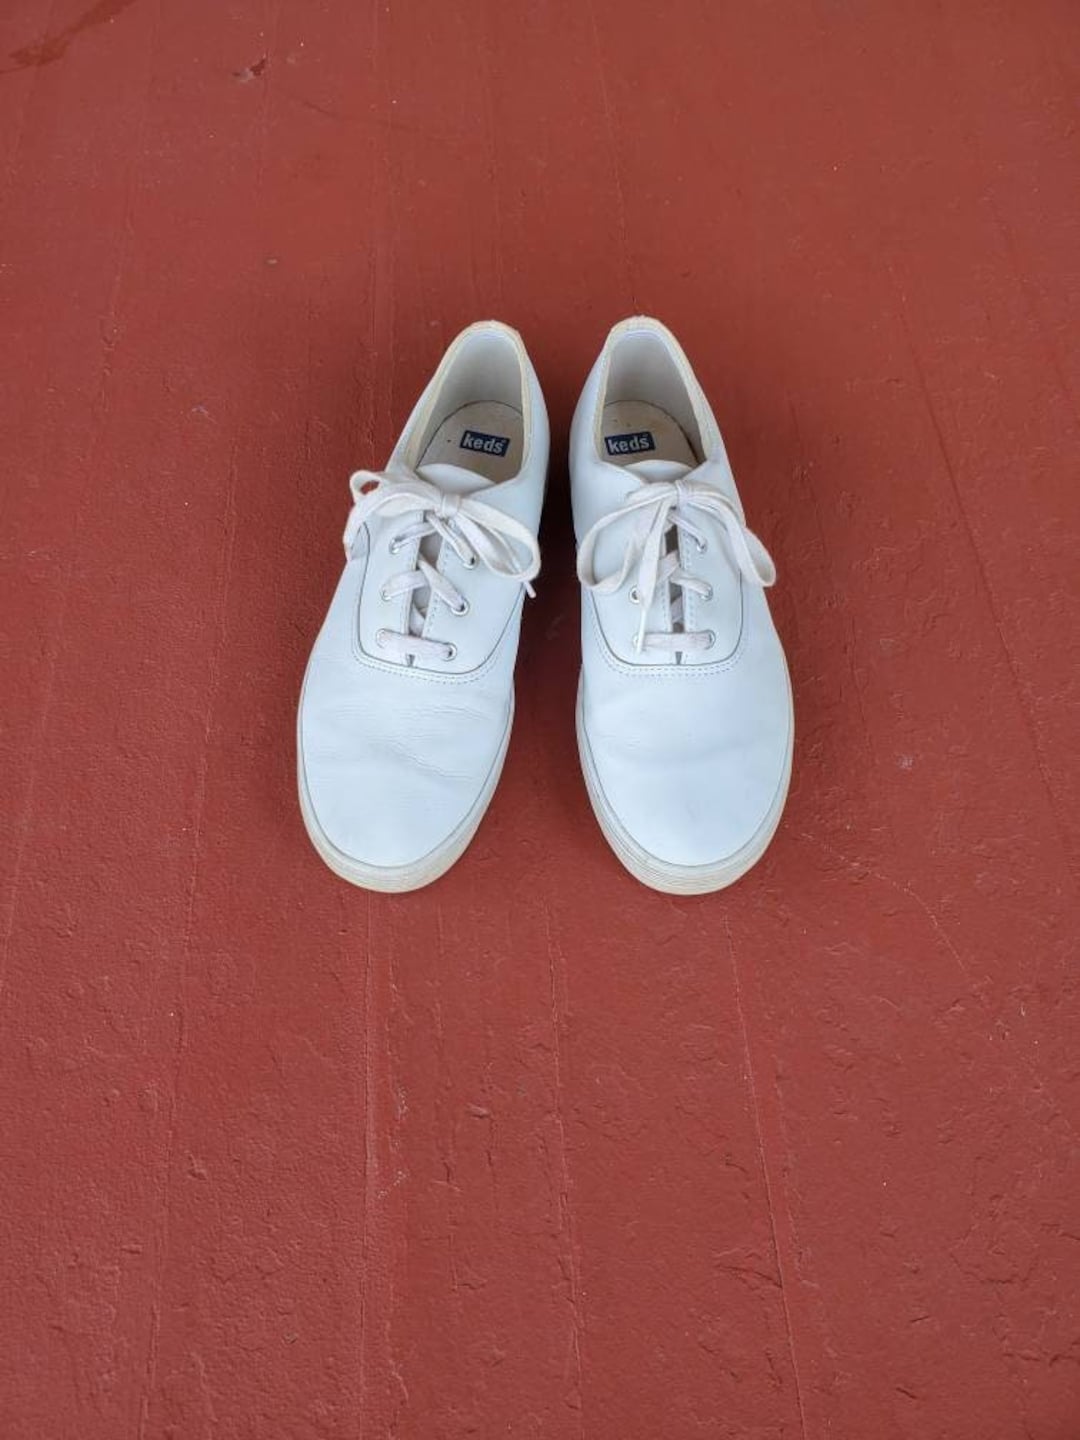 nøgle Beskrive ondsindet White Leather Keds Sneakers Women's Size 10 Men's Size - Etsy